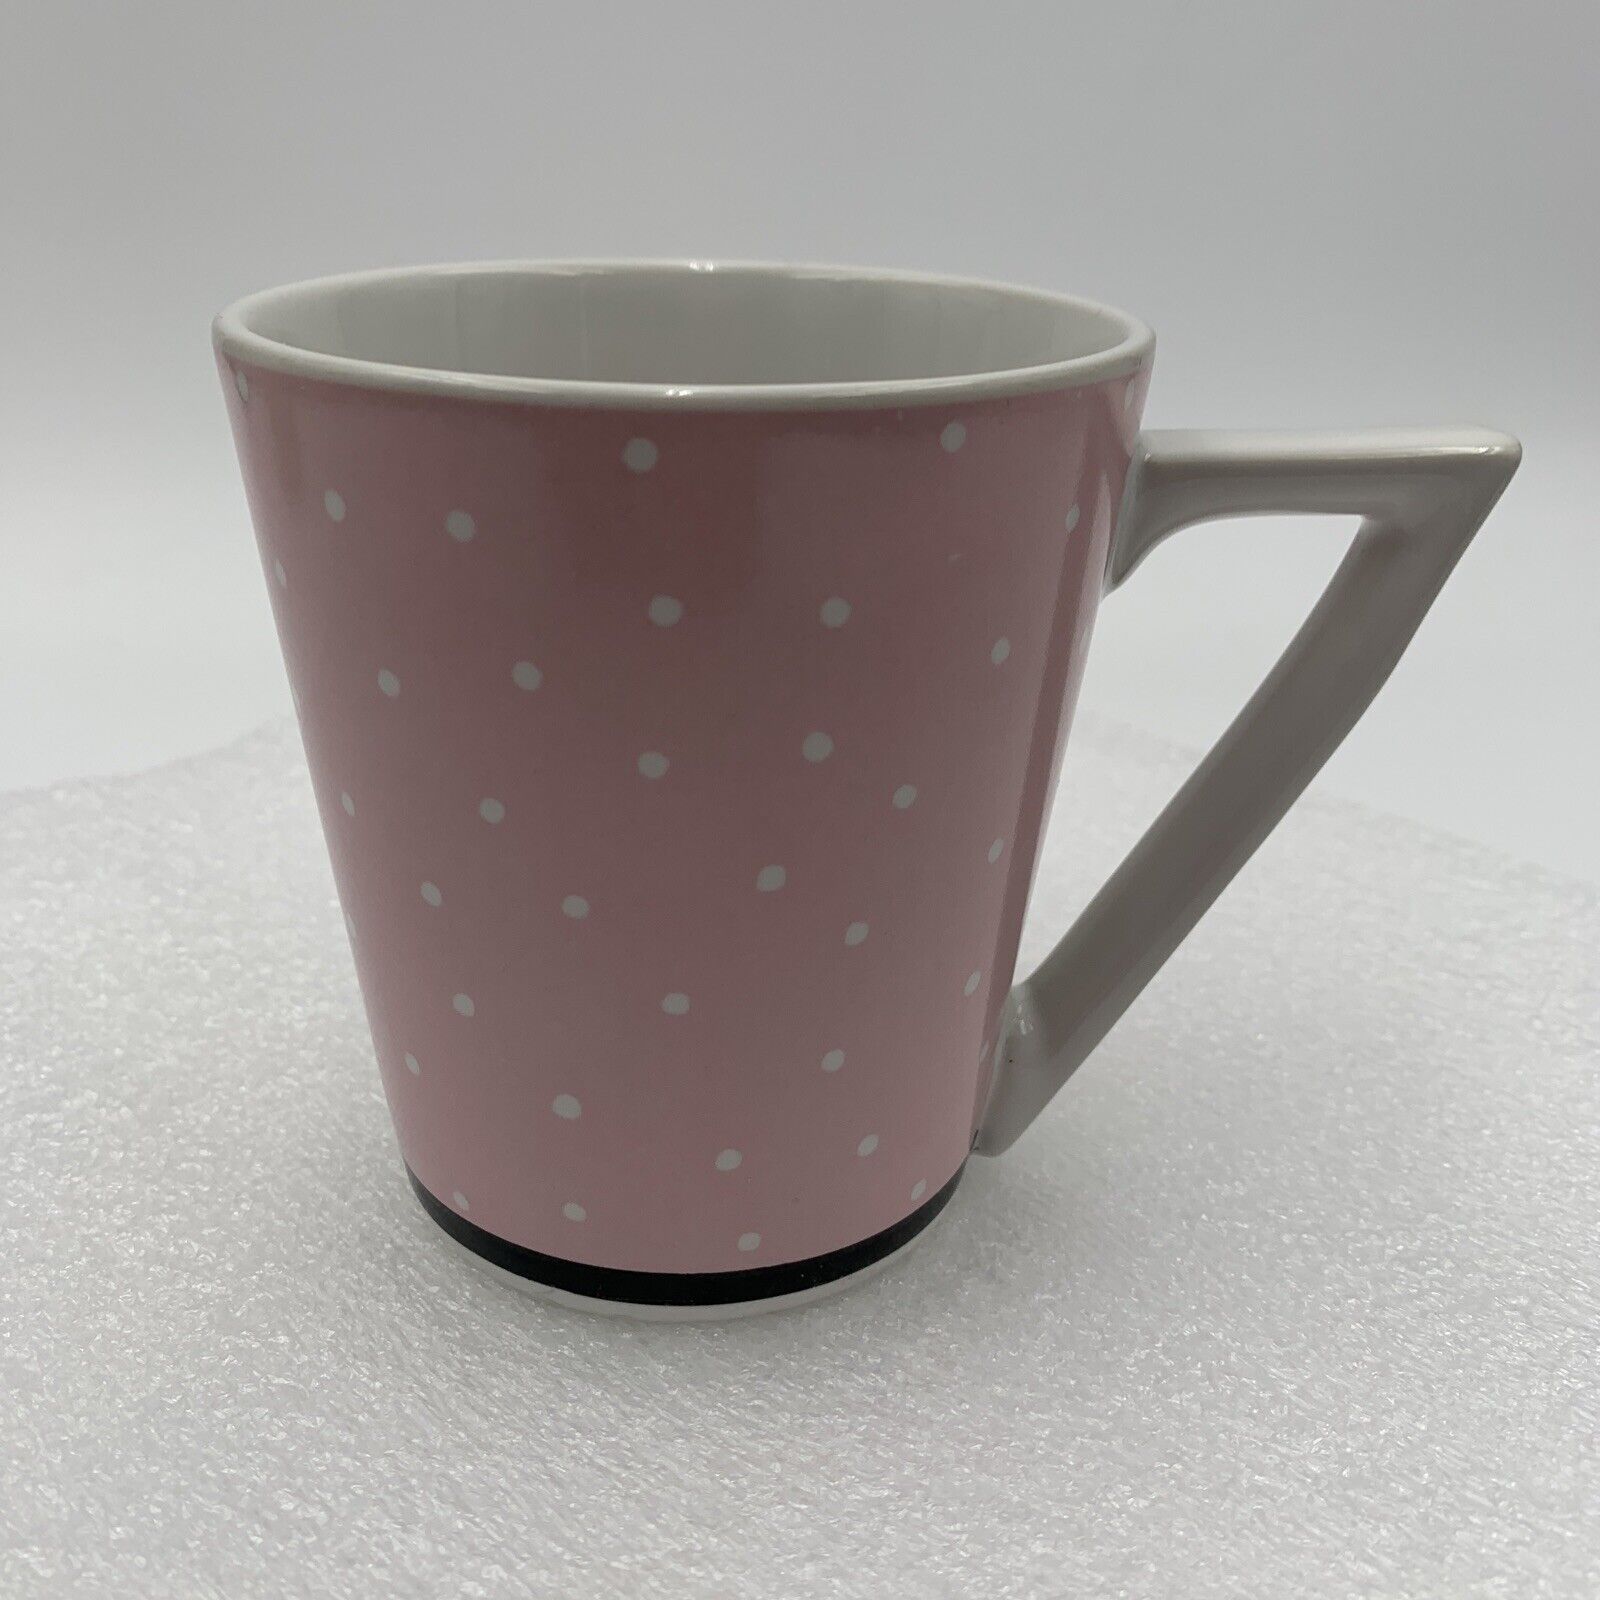 VTG Vandor Coffee Mug 1989 Pink White Polka Dots Graphics Designer Pelzman Japan